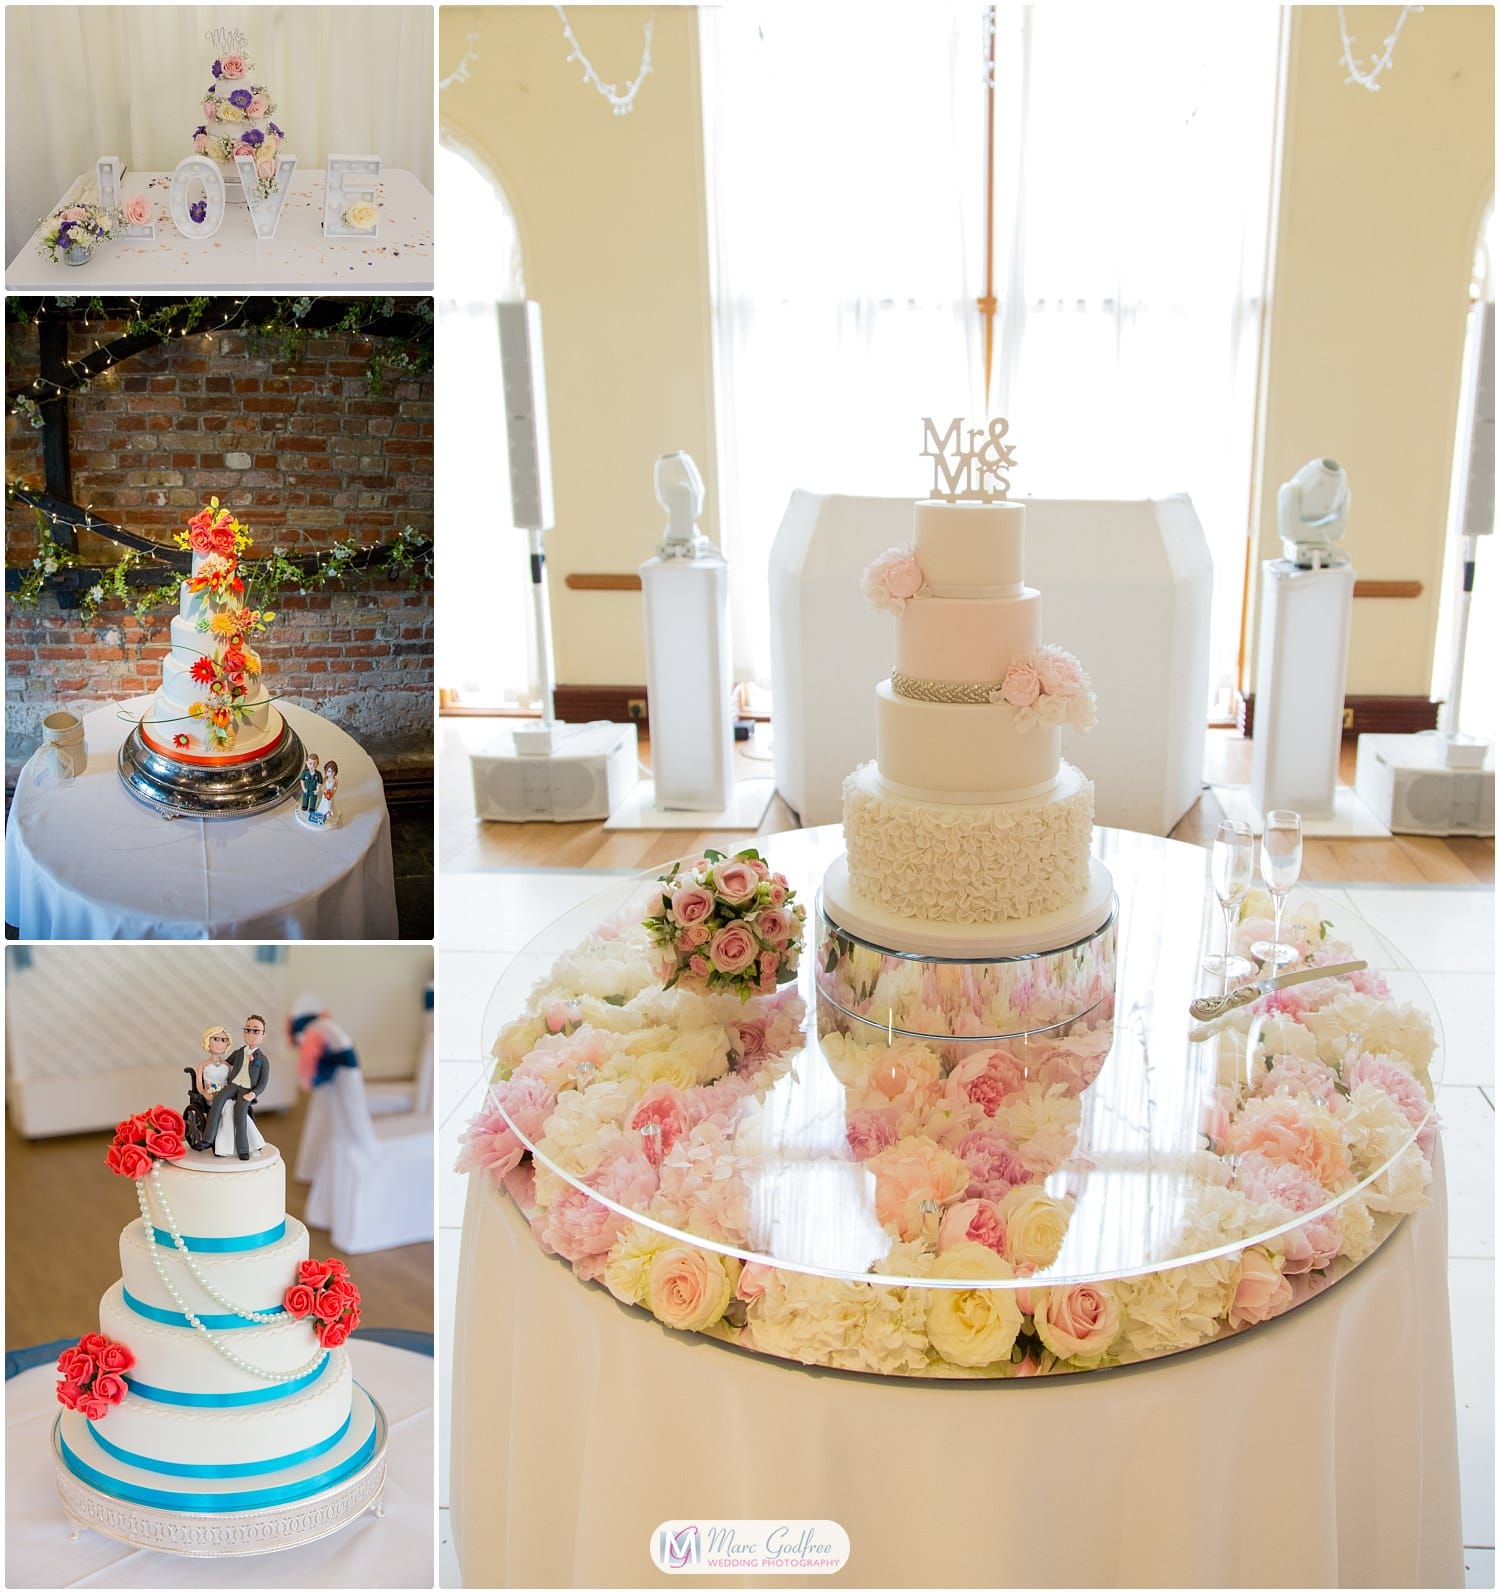 Wedding cakes - full tiers